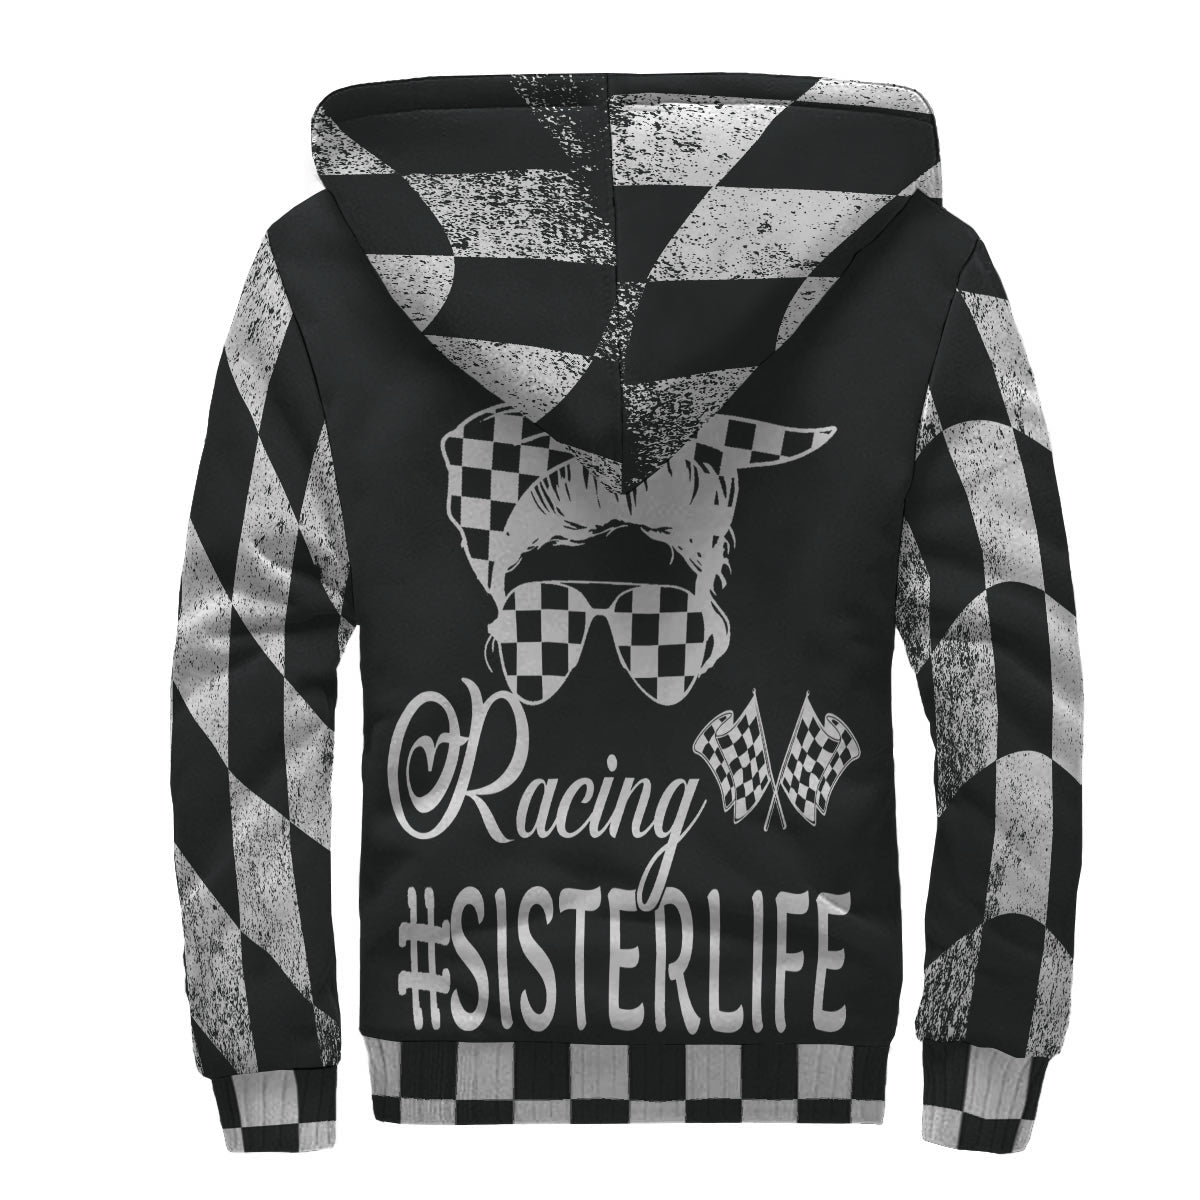 Racing sister jacket